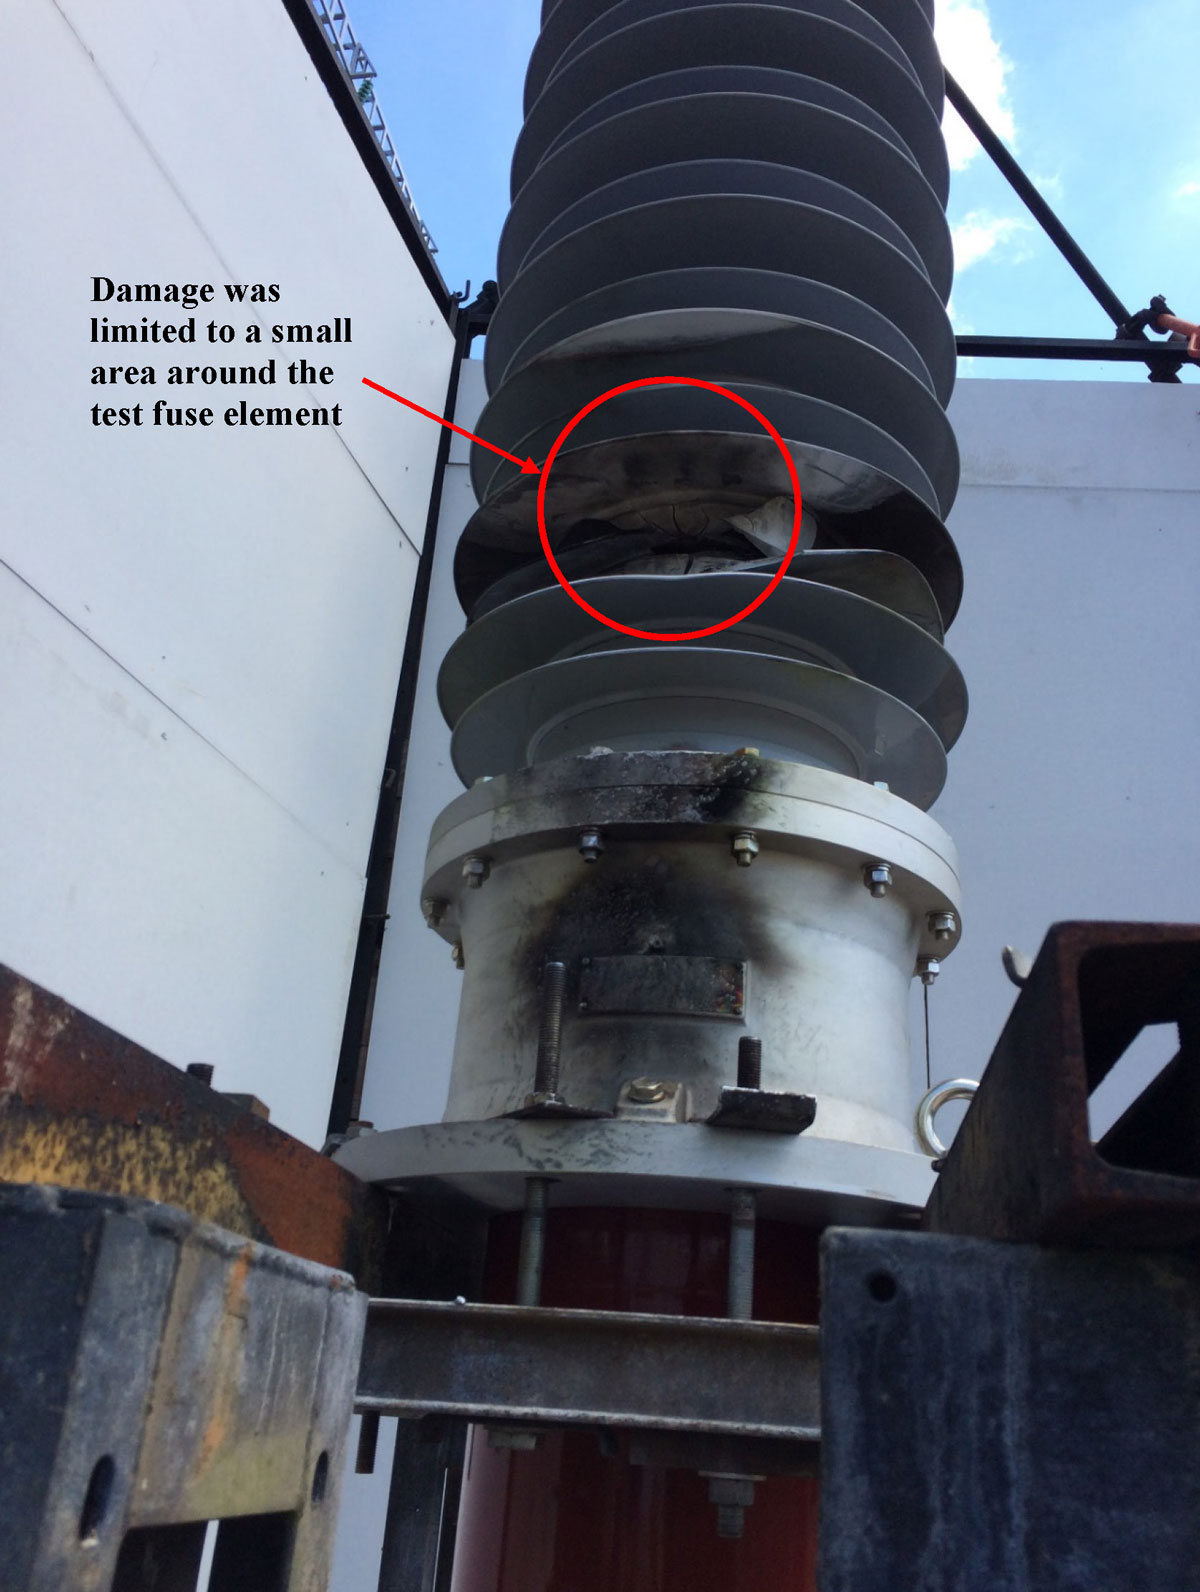 RIF Bushing internal arc fault test damage showing damage limited to test fuse element